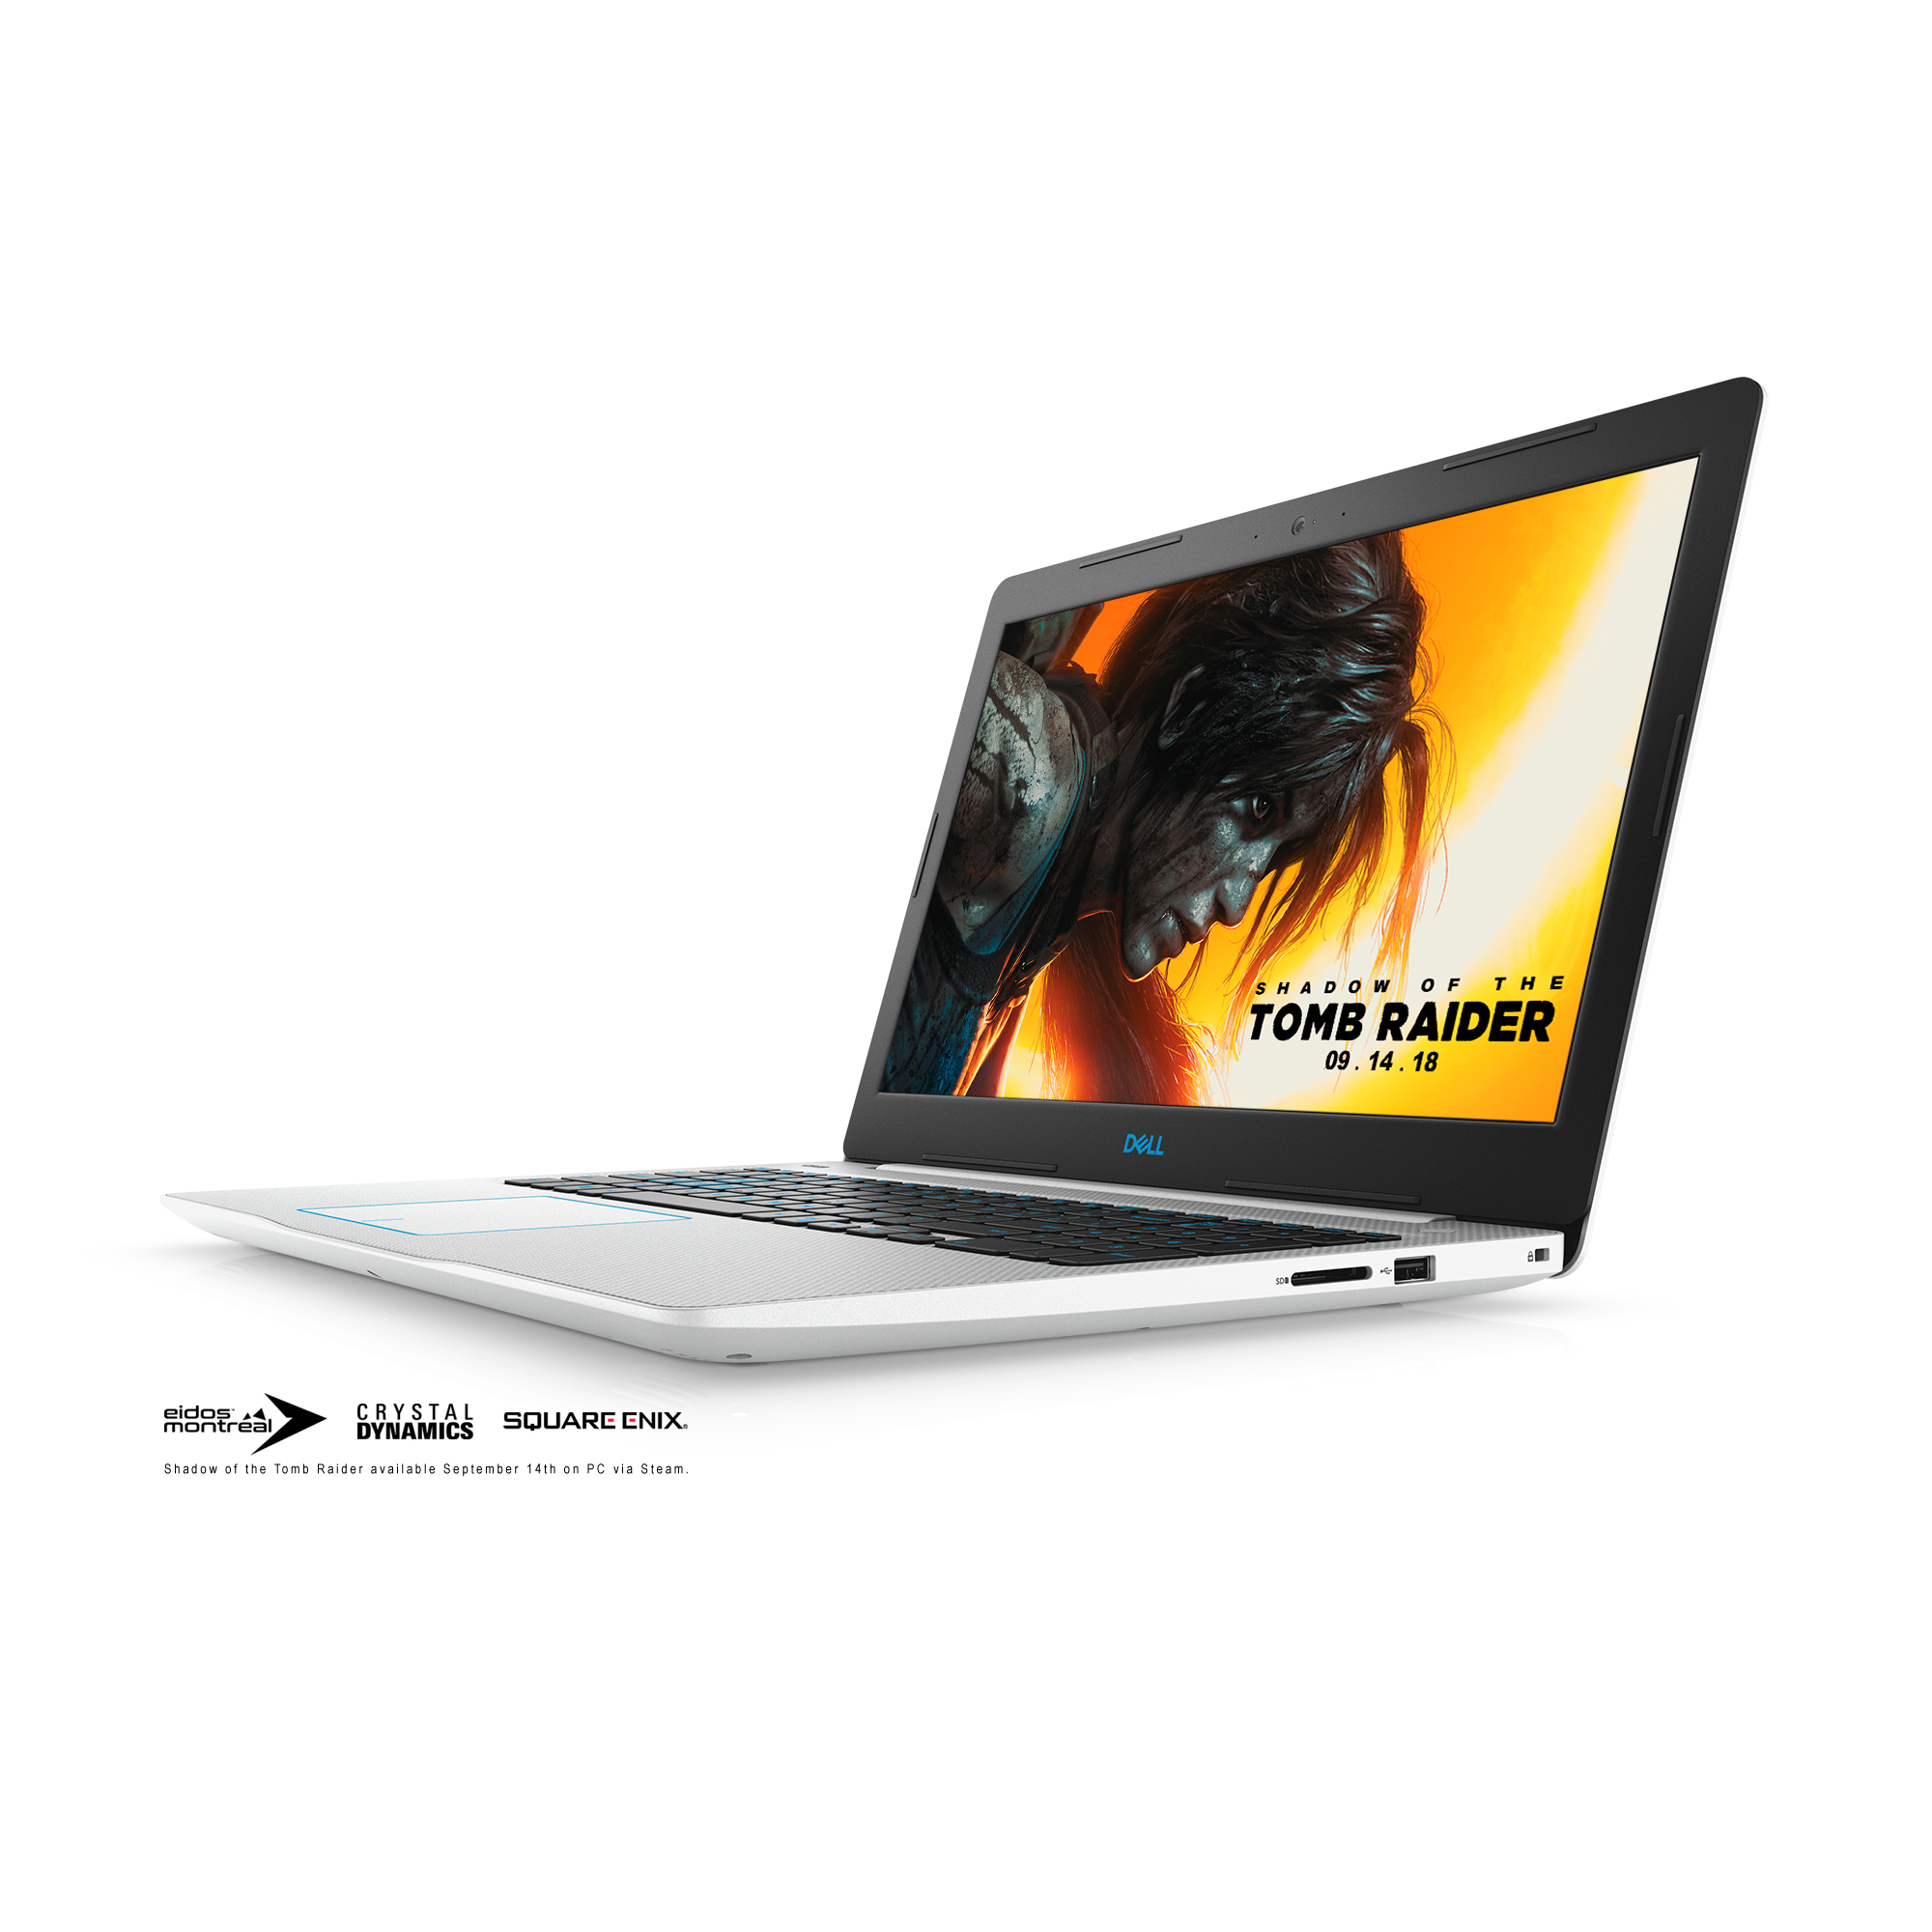 Dell G3 Gaming Laptop 15.6" Full HD, Intel Core i7-8750H, NVIDIA GeForce GTX 1050 Ti 4GB, 1TB HDD + 128GB SSD, 8GB RAM, G3579-7054WHT - image 2 of 6